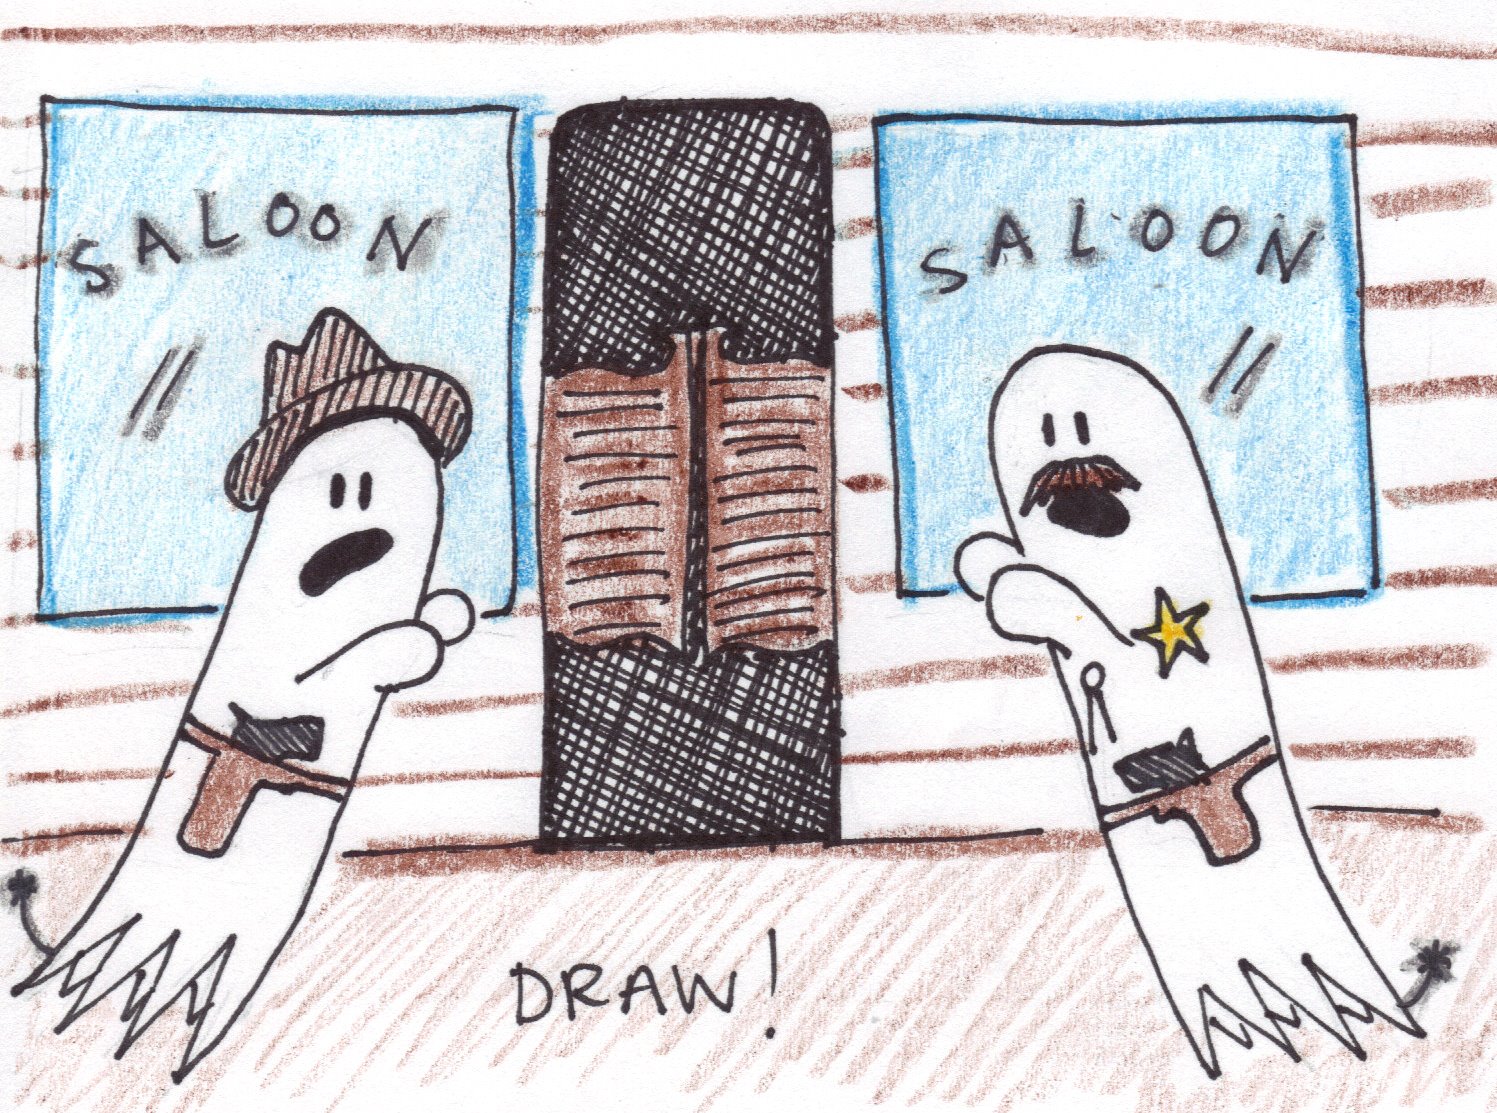 [saloon2.jpg]